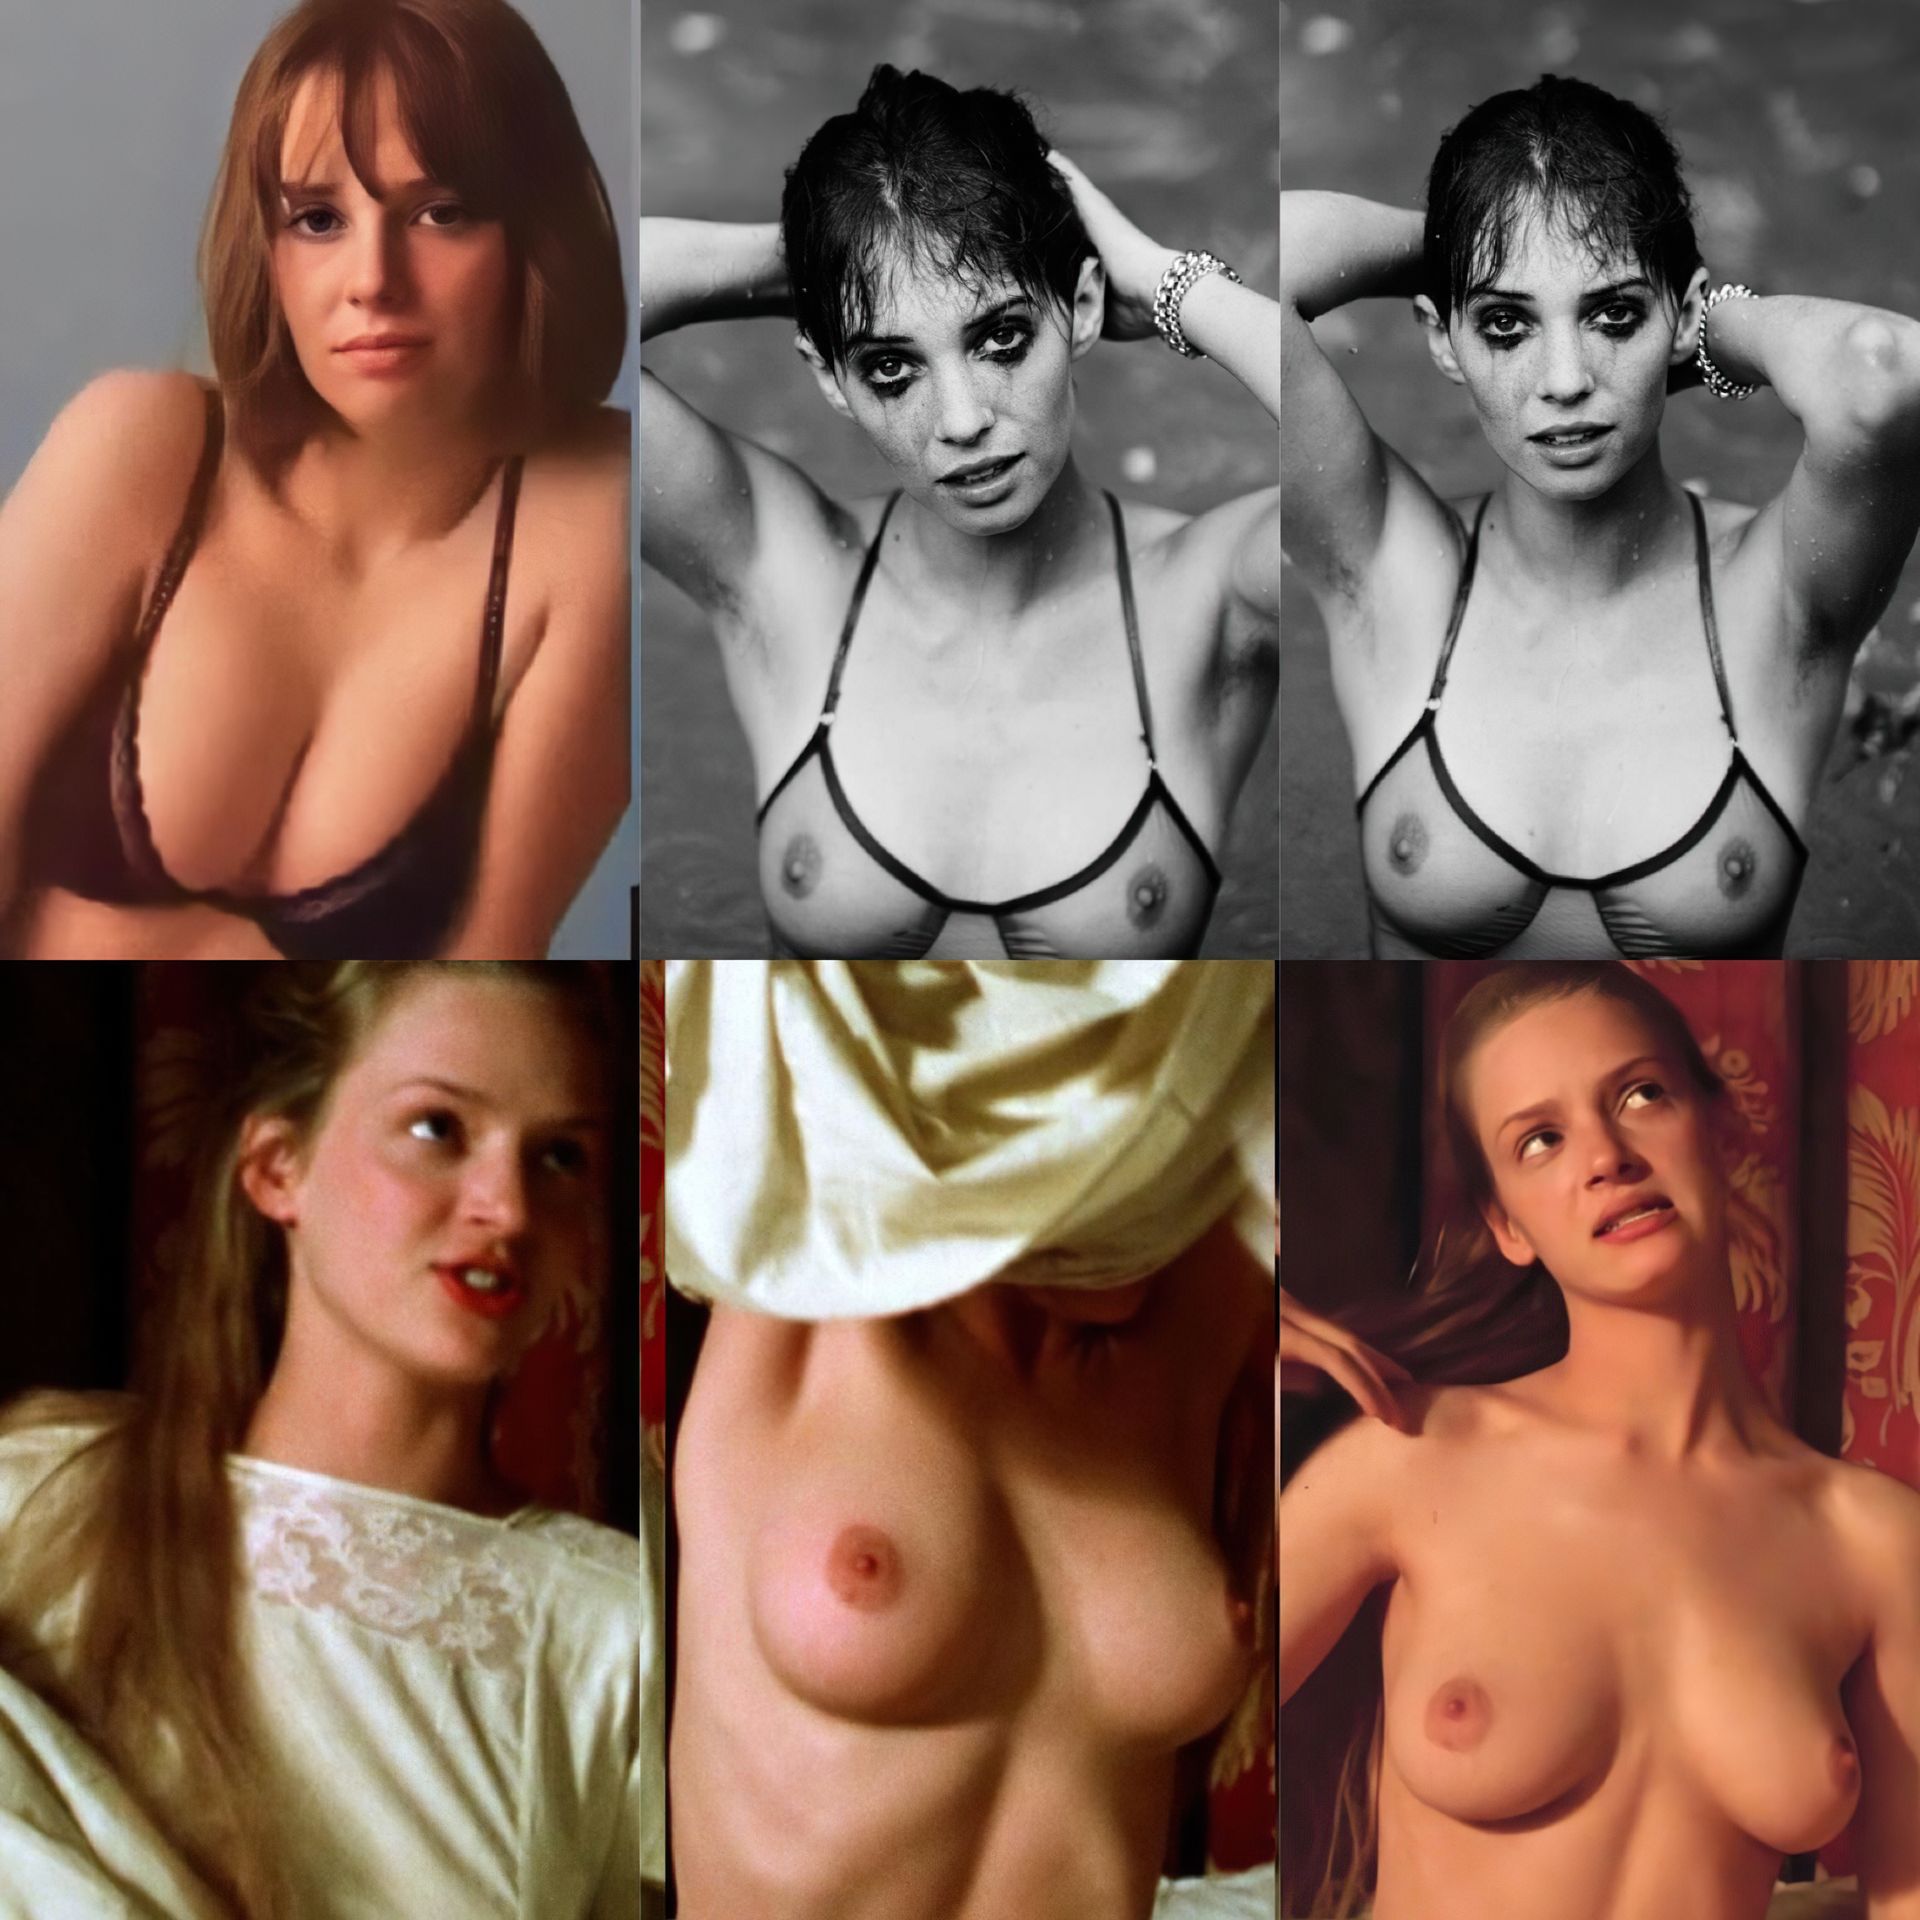 Stranger Things" actress Maya Hawke slips out her tit while posing nud...